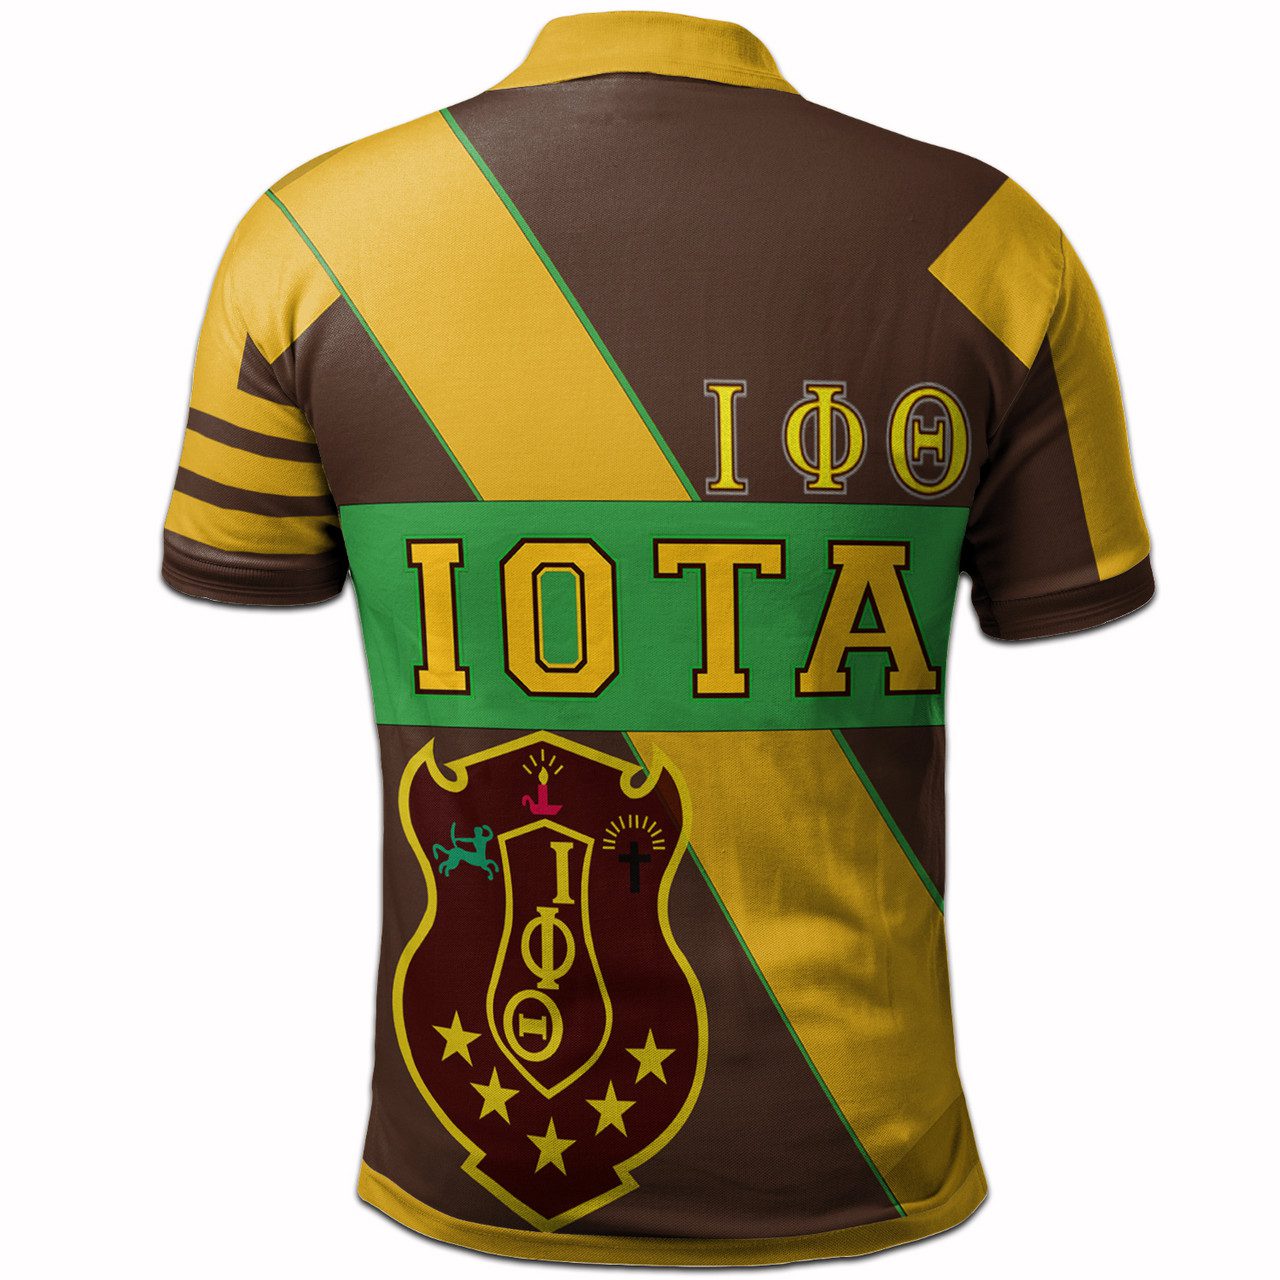 Iota Phi Theta Polo Shirt – Fraternity Blood In My DNA Polo Shirt